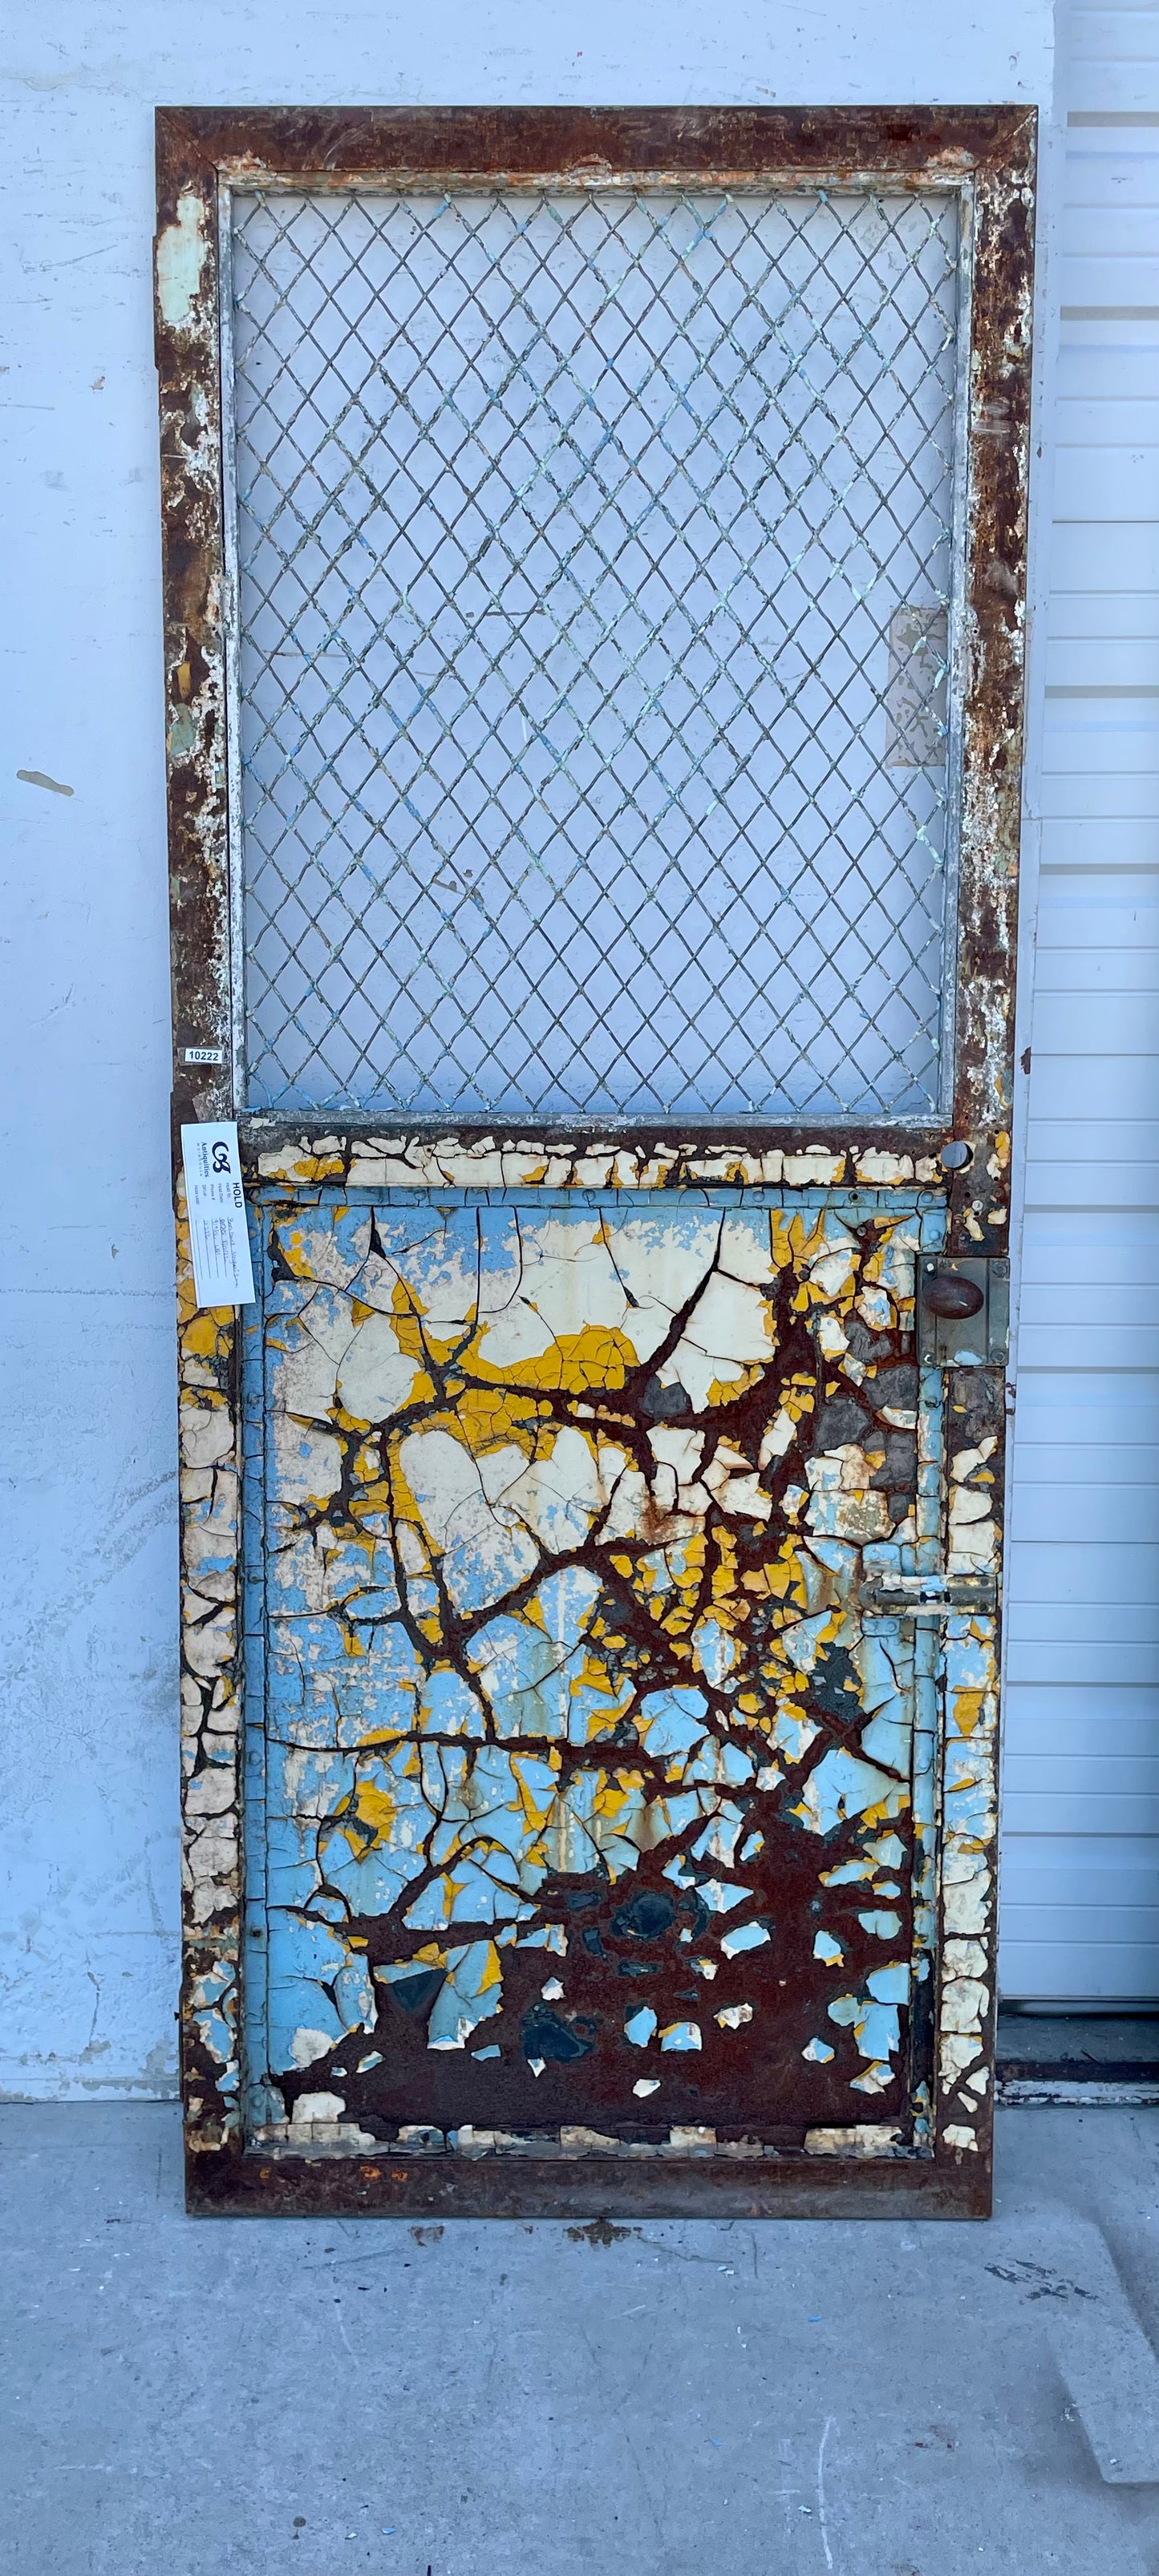 Industrial Rusted Blue Metal Chickenwire Single Door